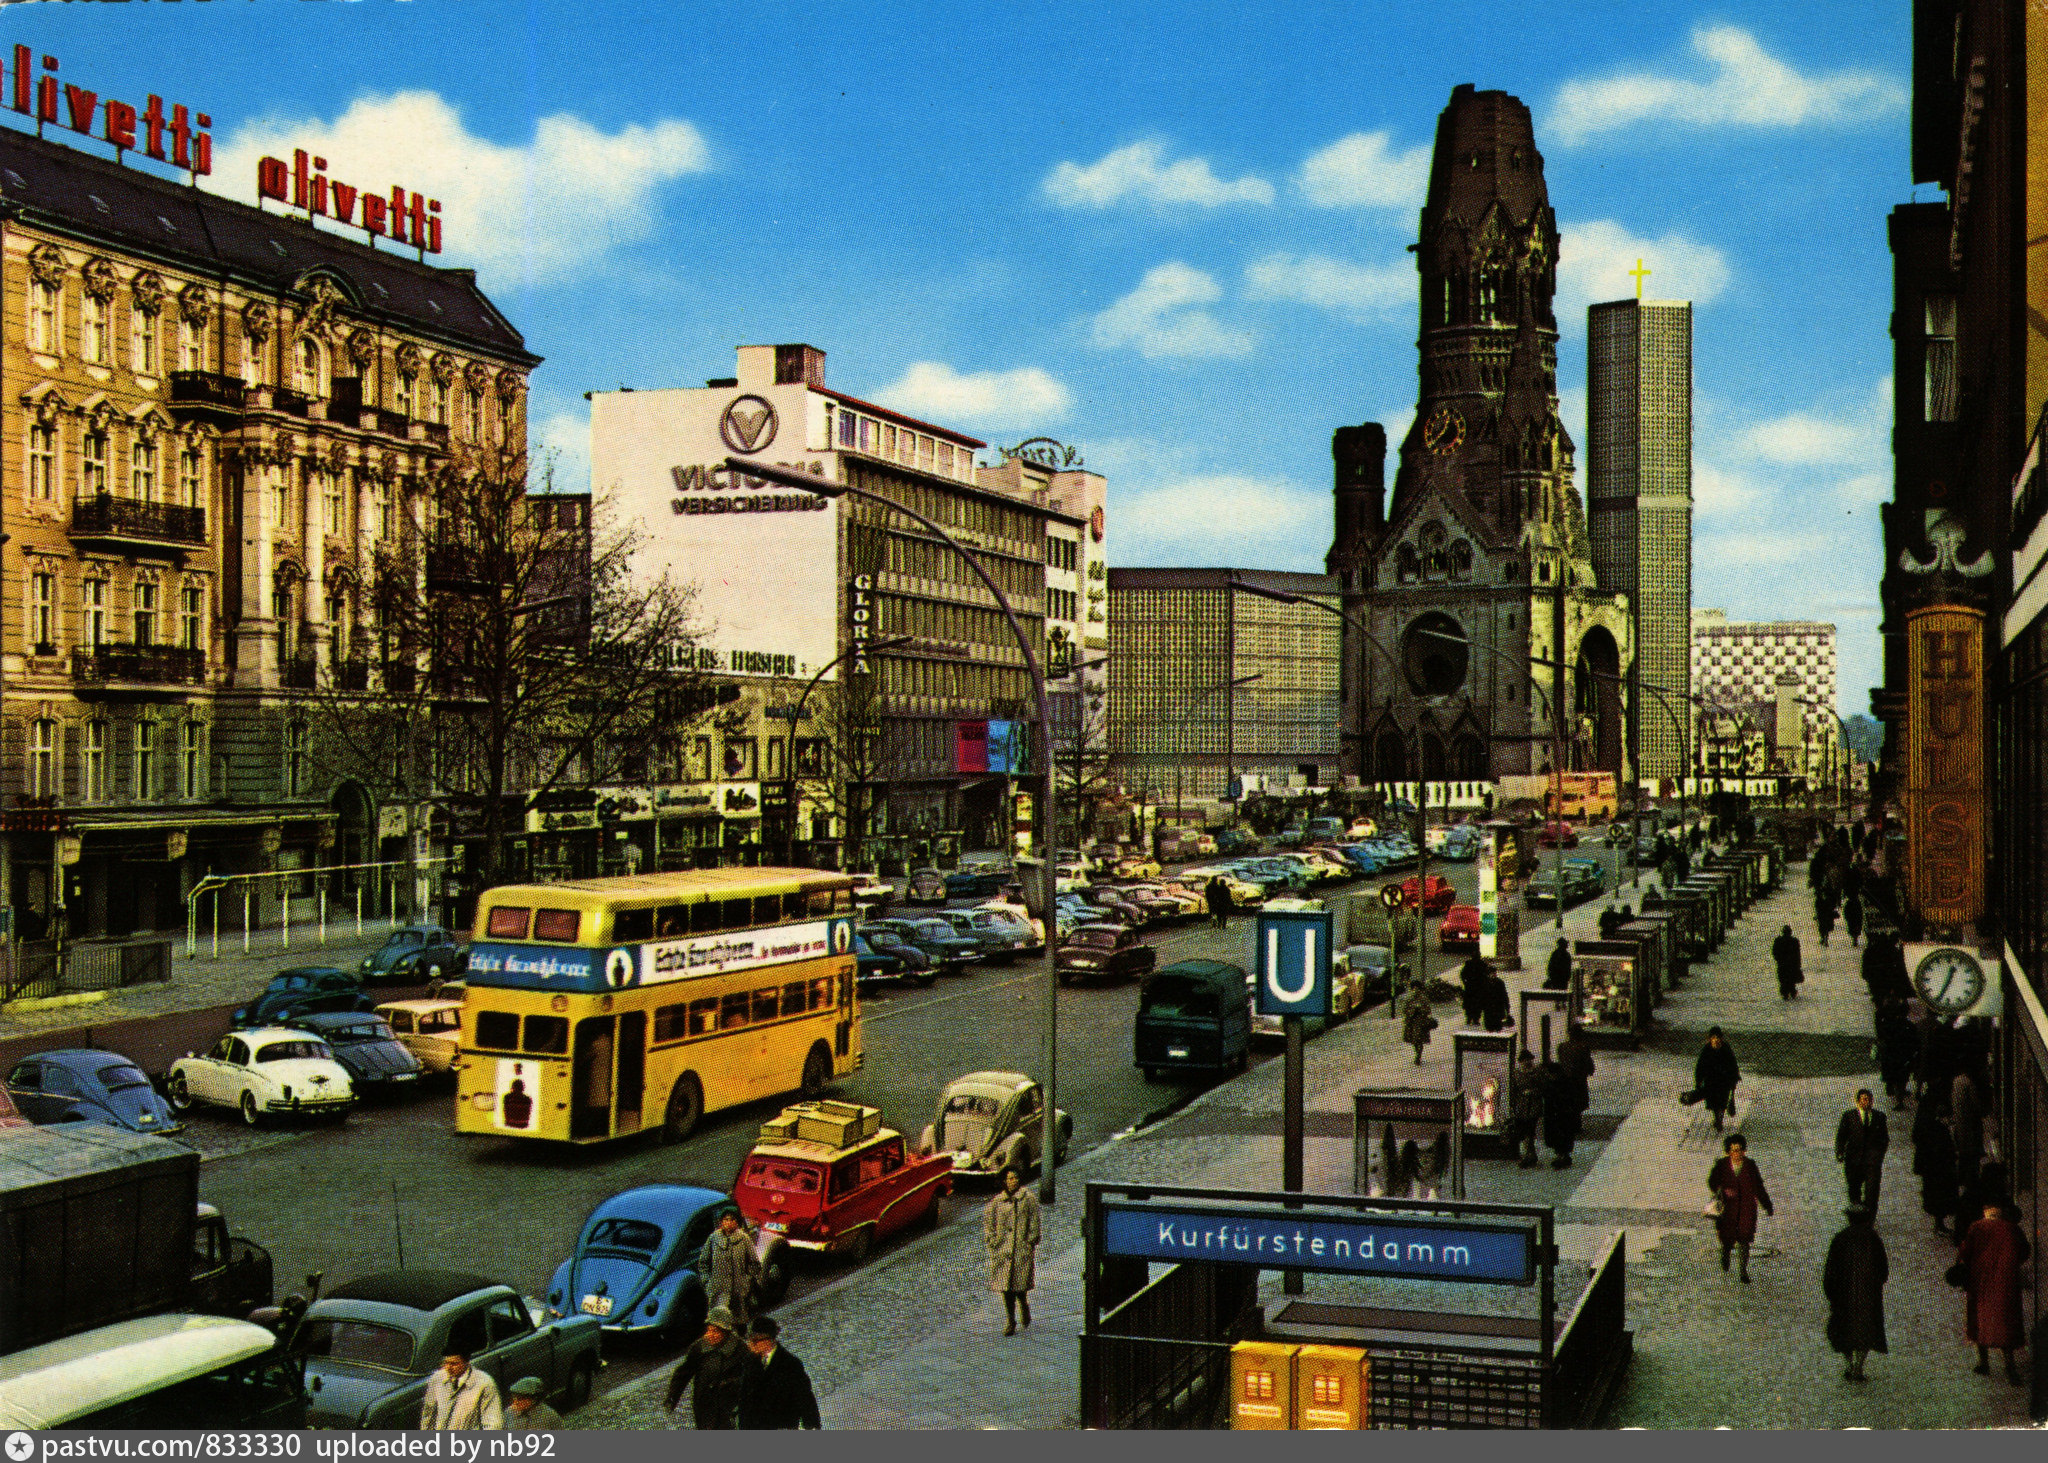 Европа 1960 е. Западный Берлин в 1950-е. Западный Берлин ФРГ. Западный Берлин 1970-е. Западный Берлин 1960.